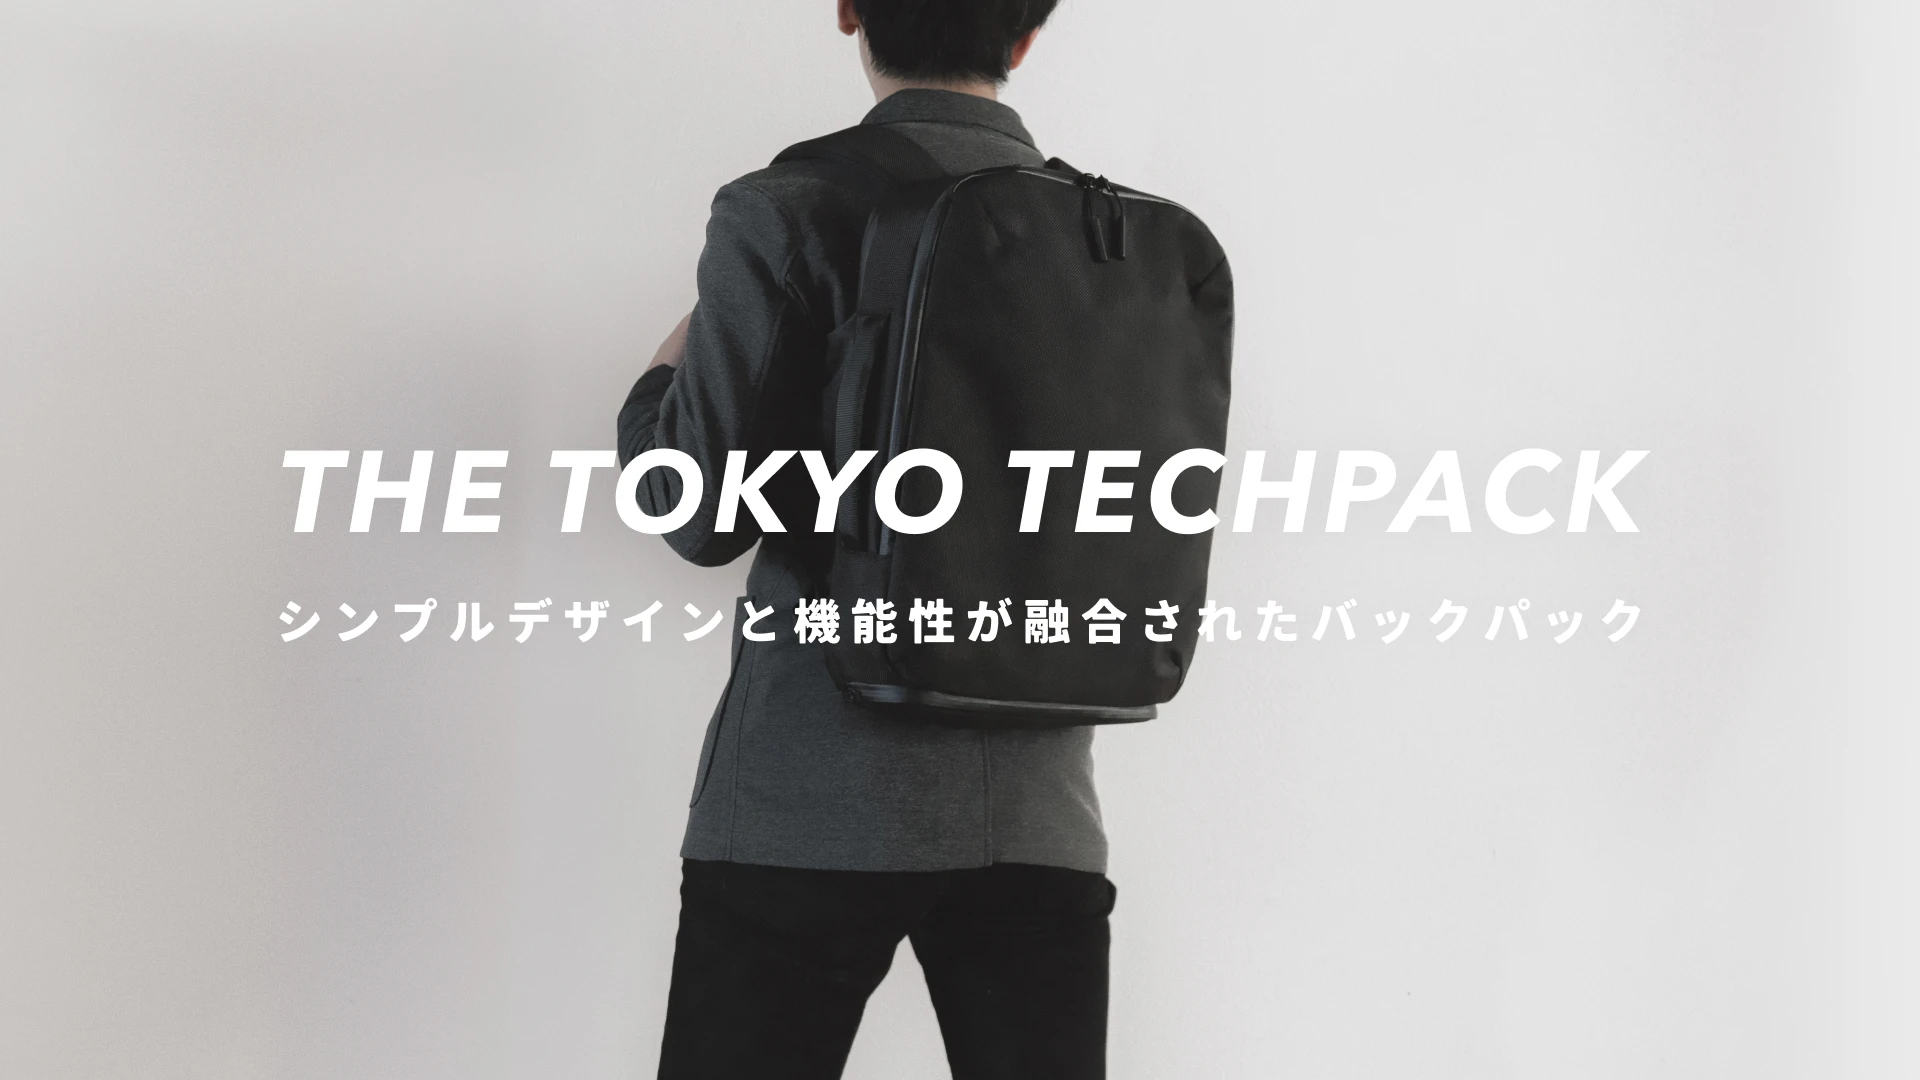 使用頻度2回casefinite ERGOFINITE THE TOKYO TECHPACK